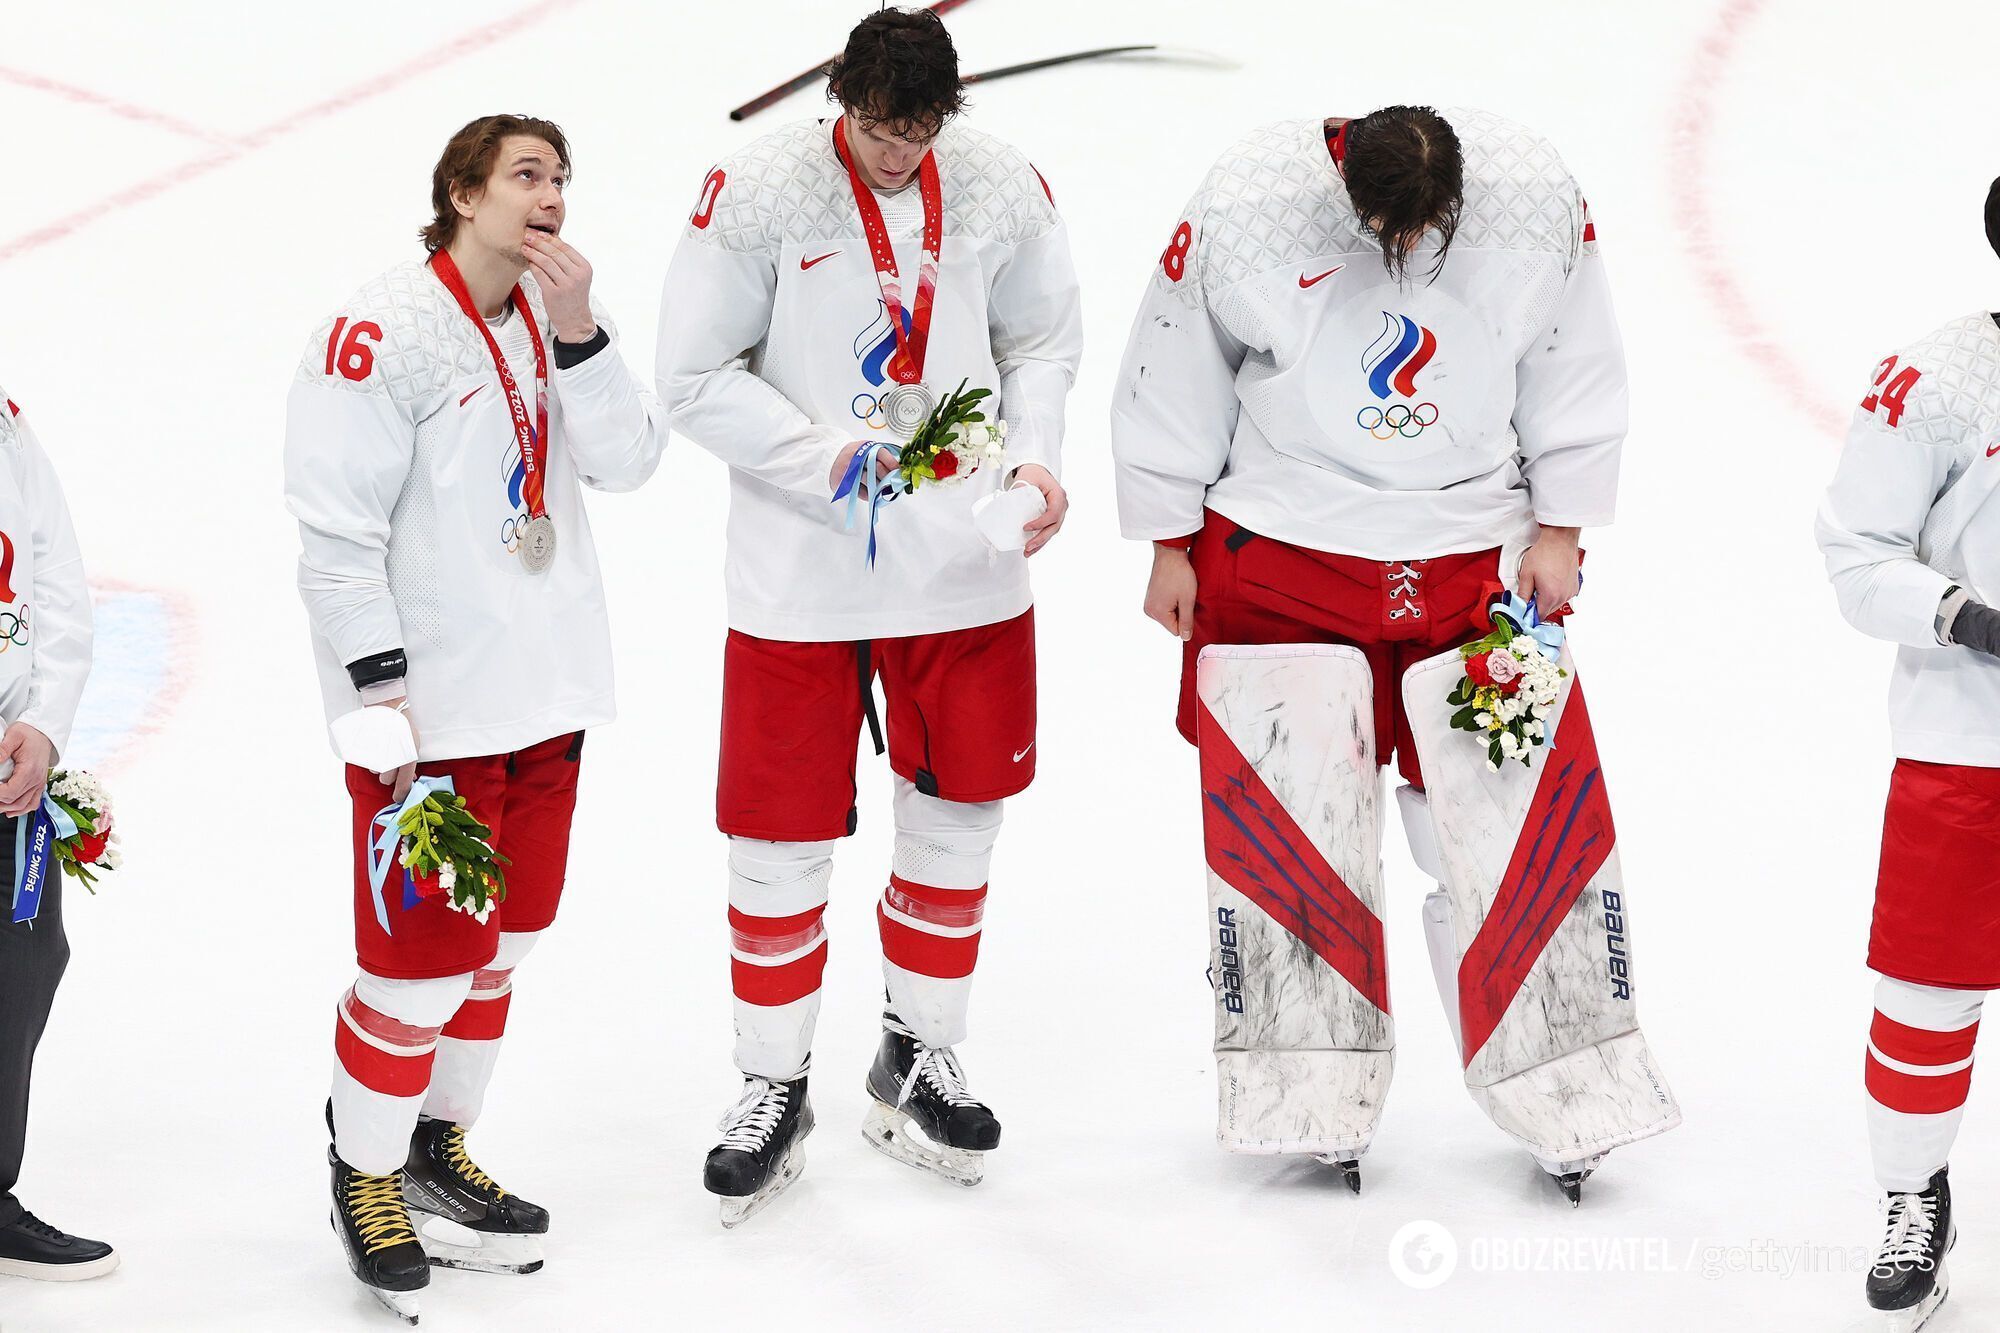 Russian world champion demands NHL to boycott Olympics without Russia